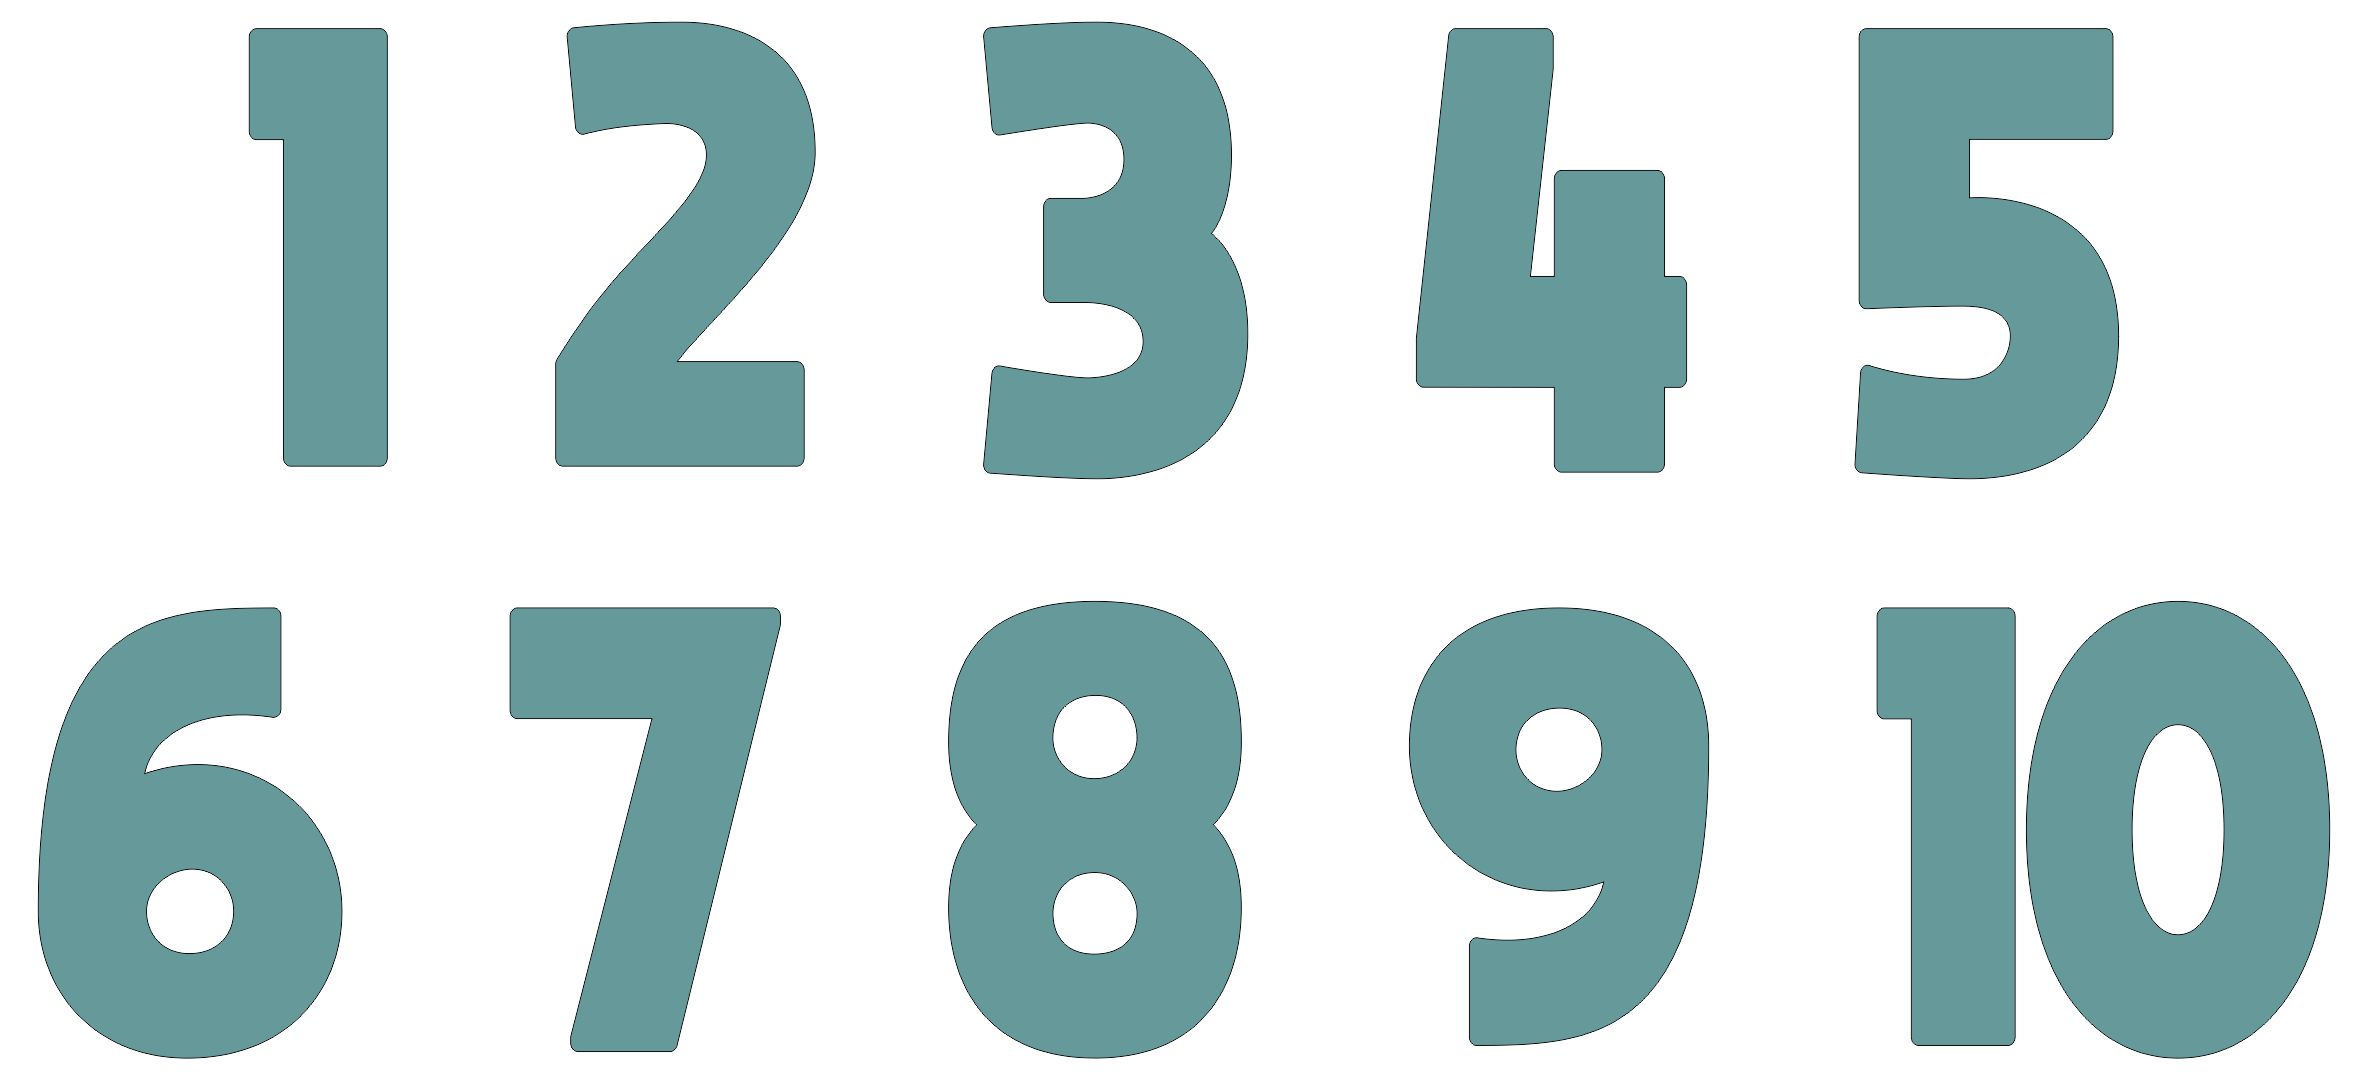 7 Best Images of Printable Number 2 - Free Printable Numbers 0 9, Large